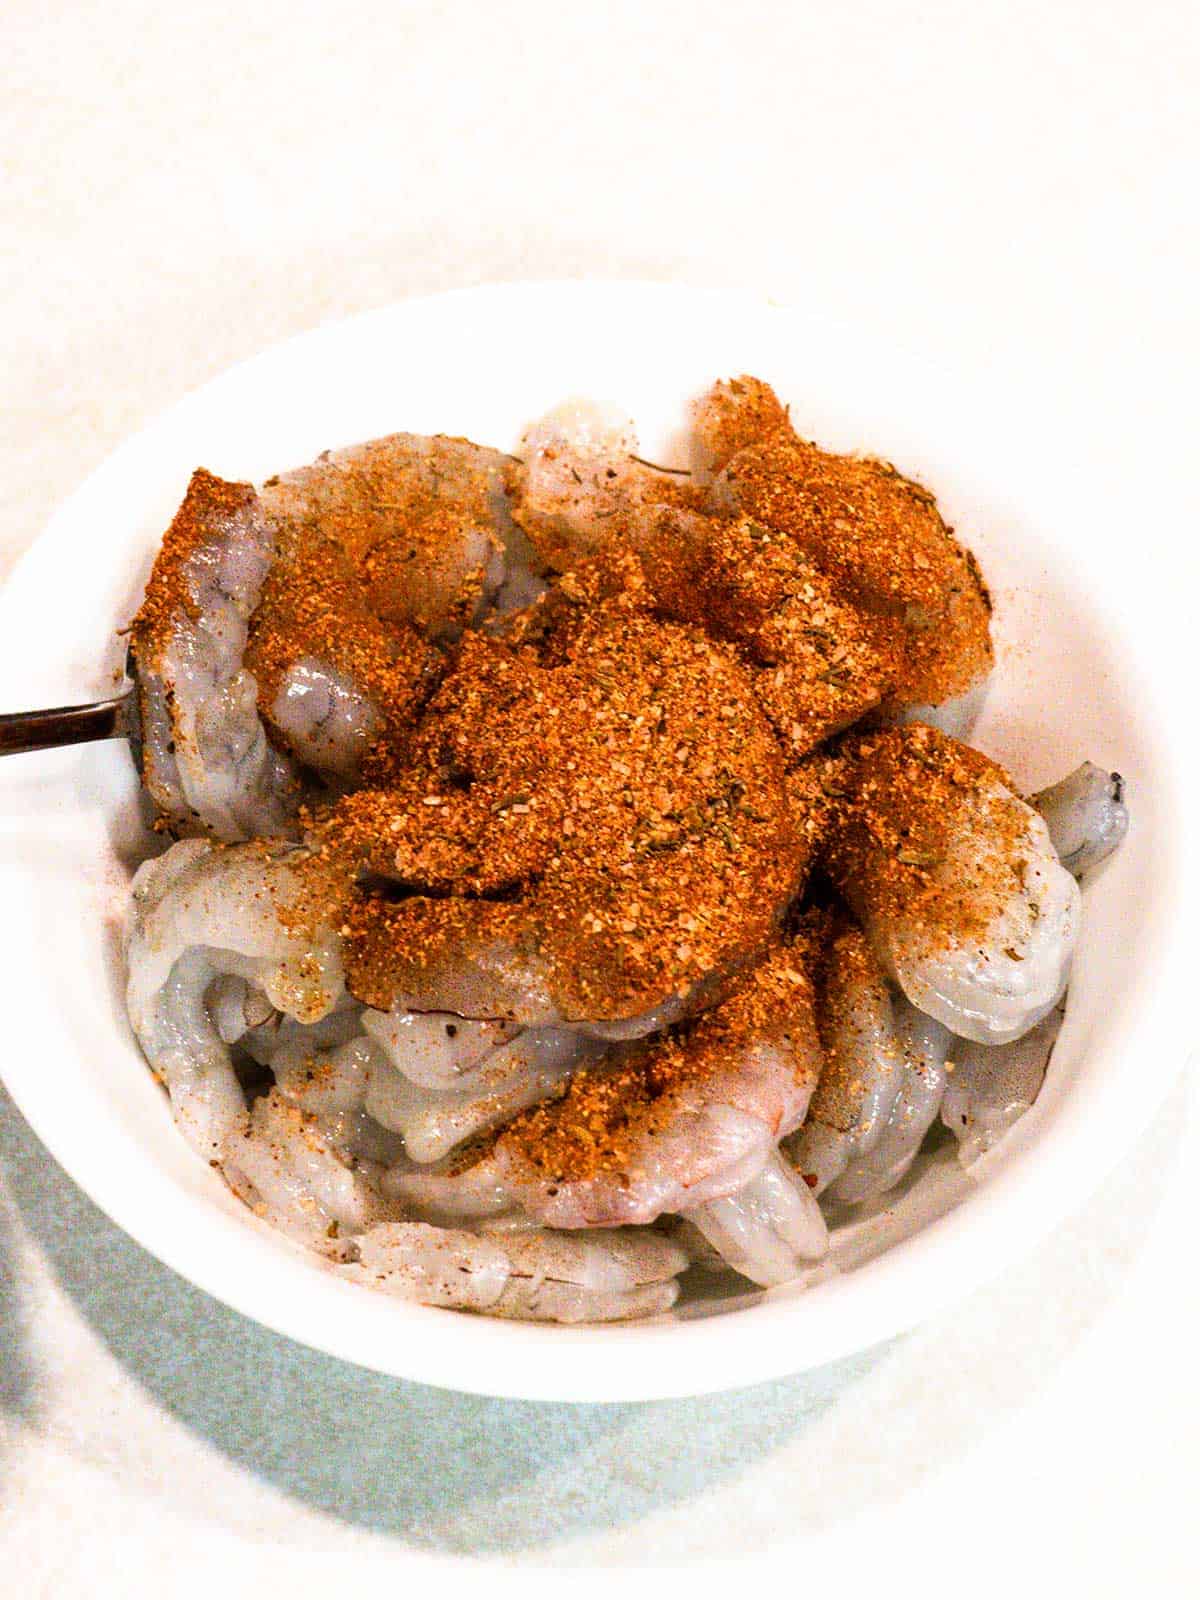 Seasoning shrimp with Creole seasoning.